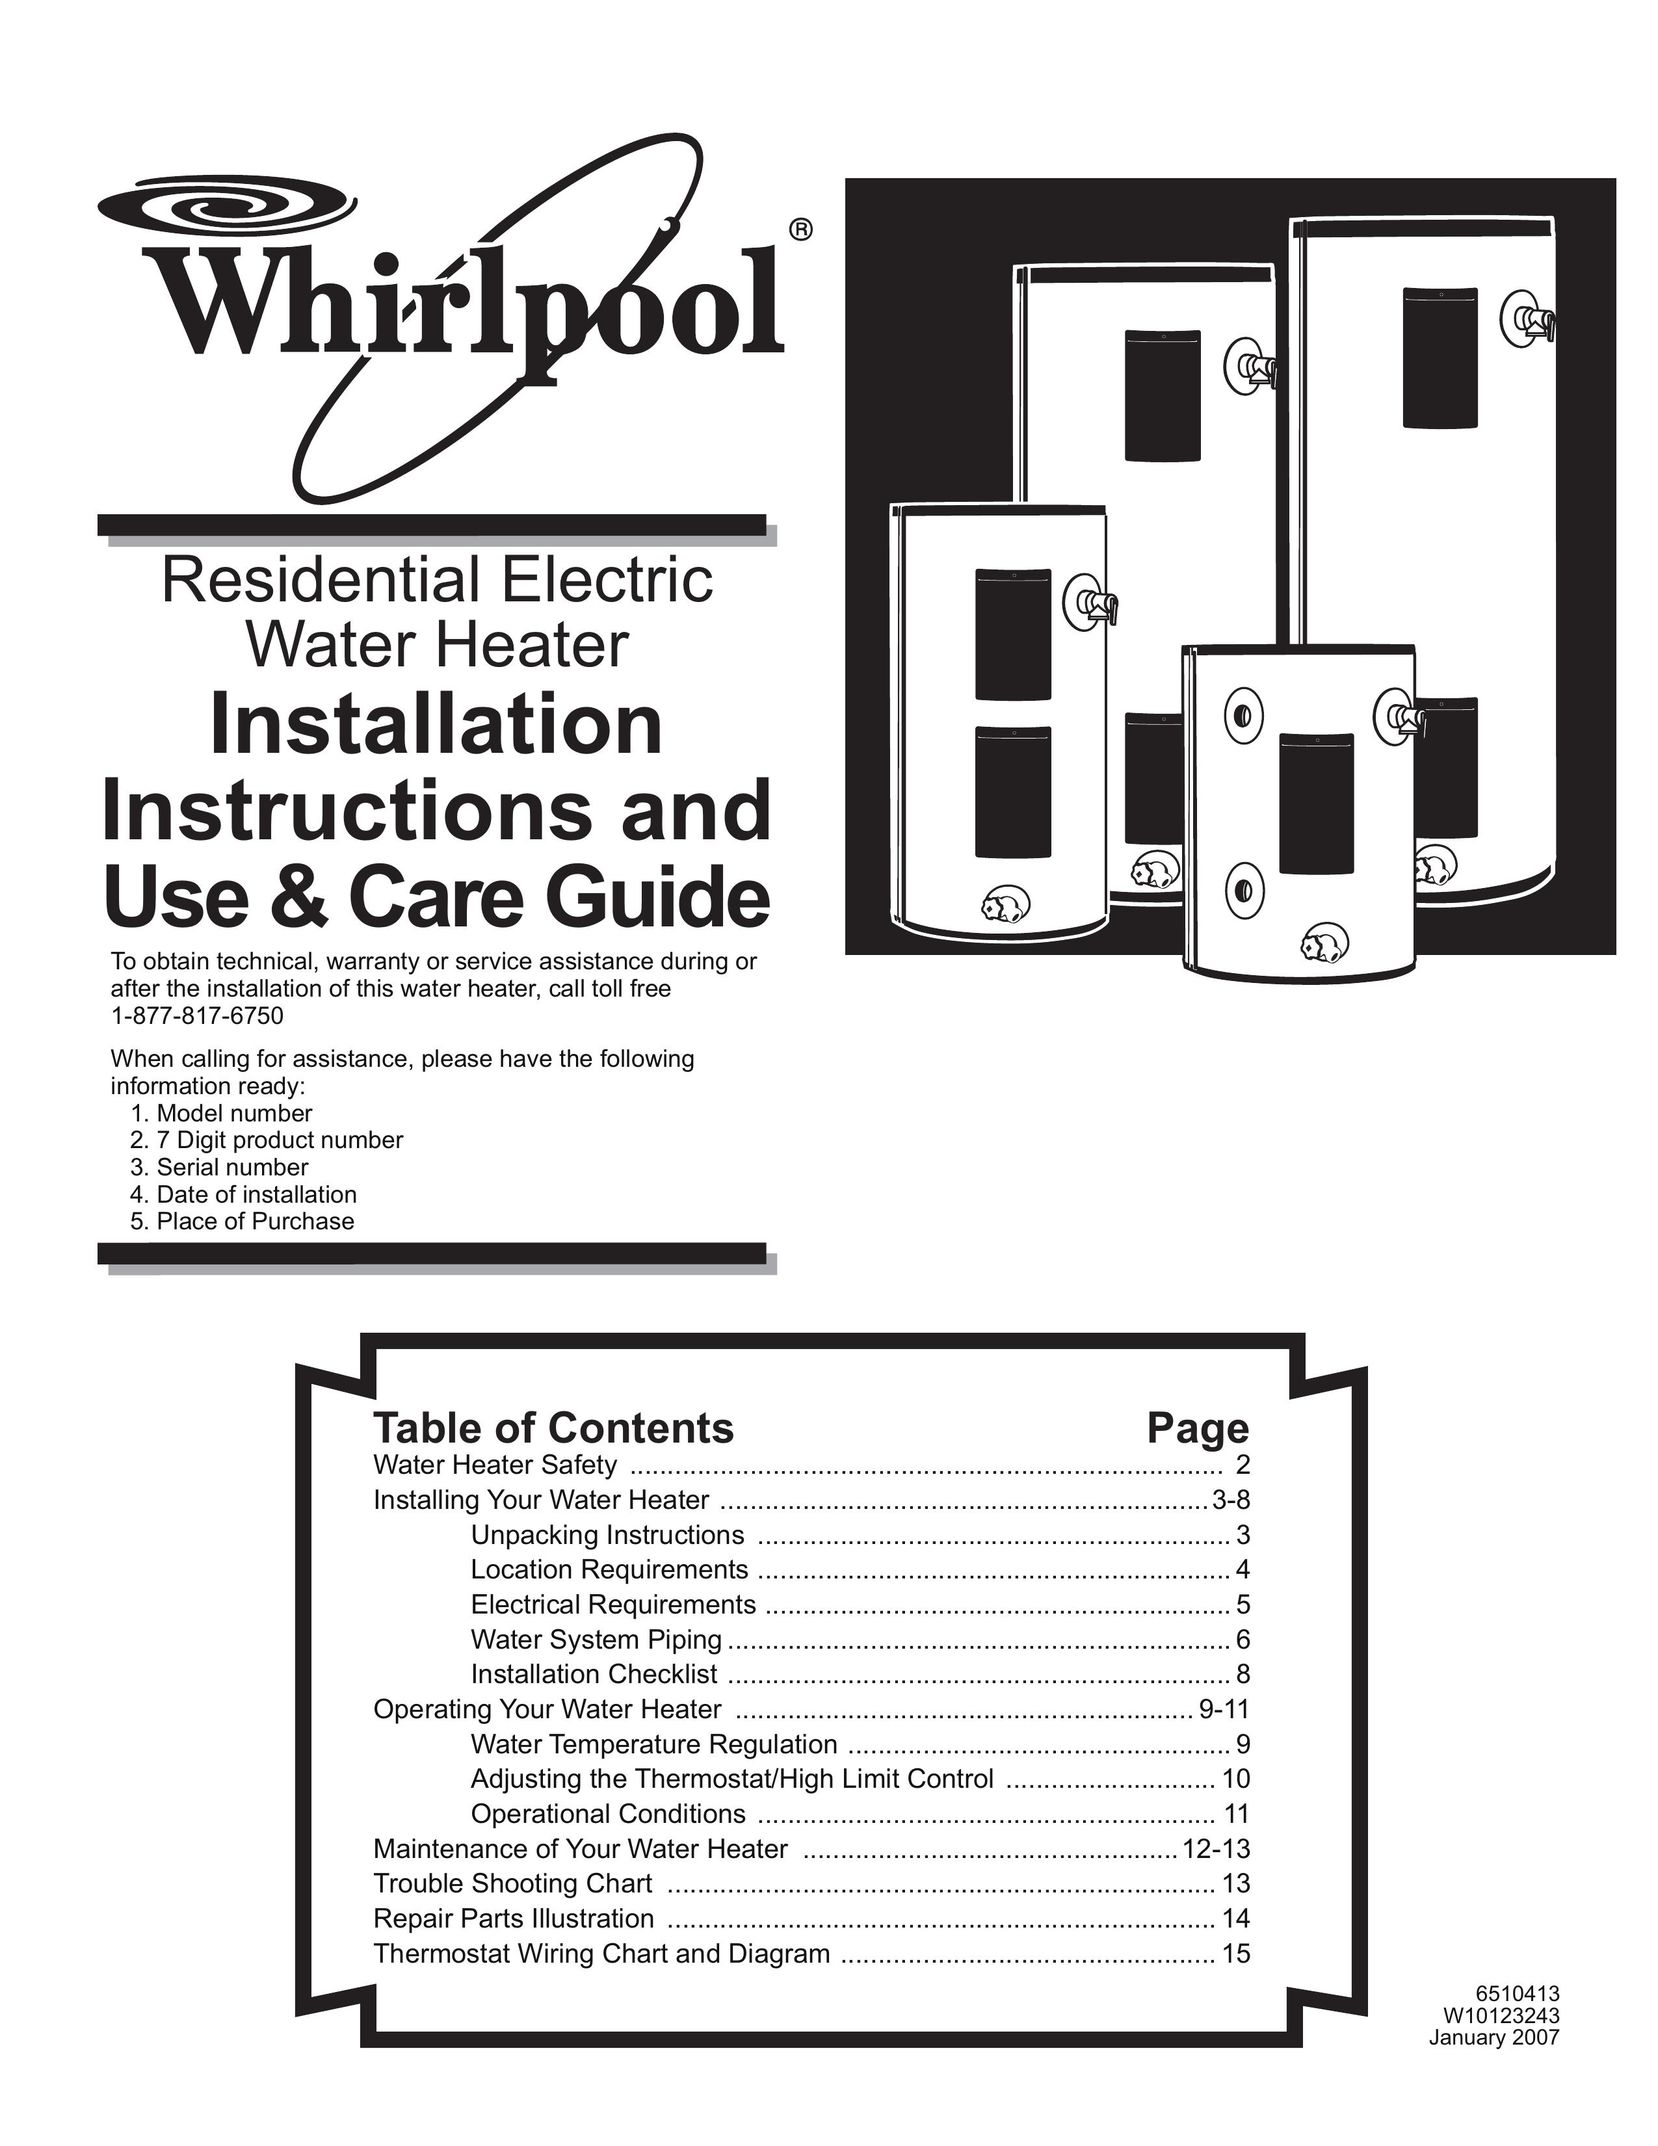 Whirlpool 140389 Water Heater User Manual